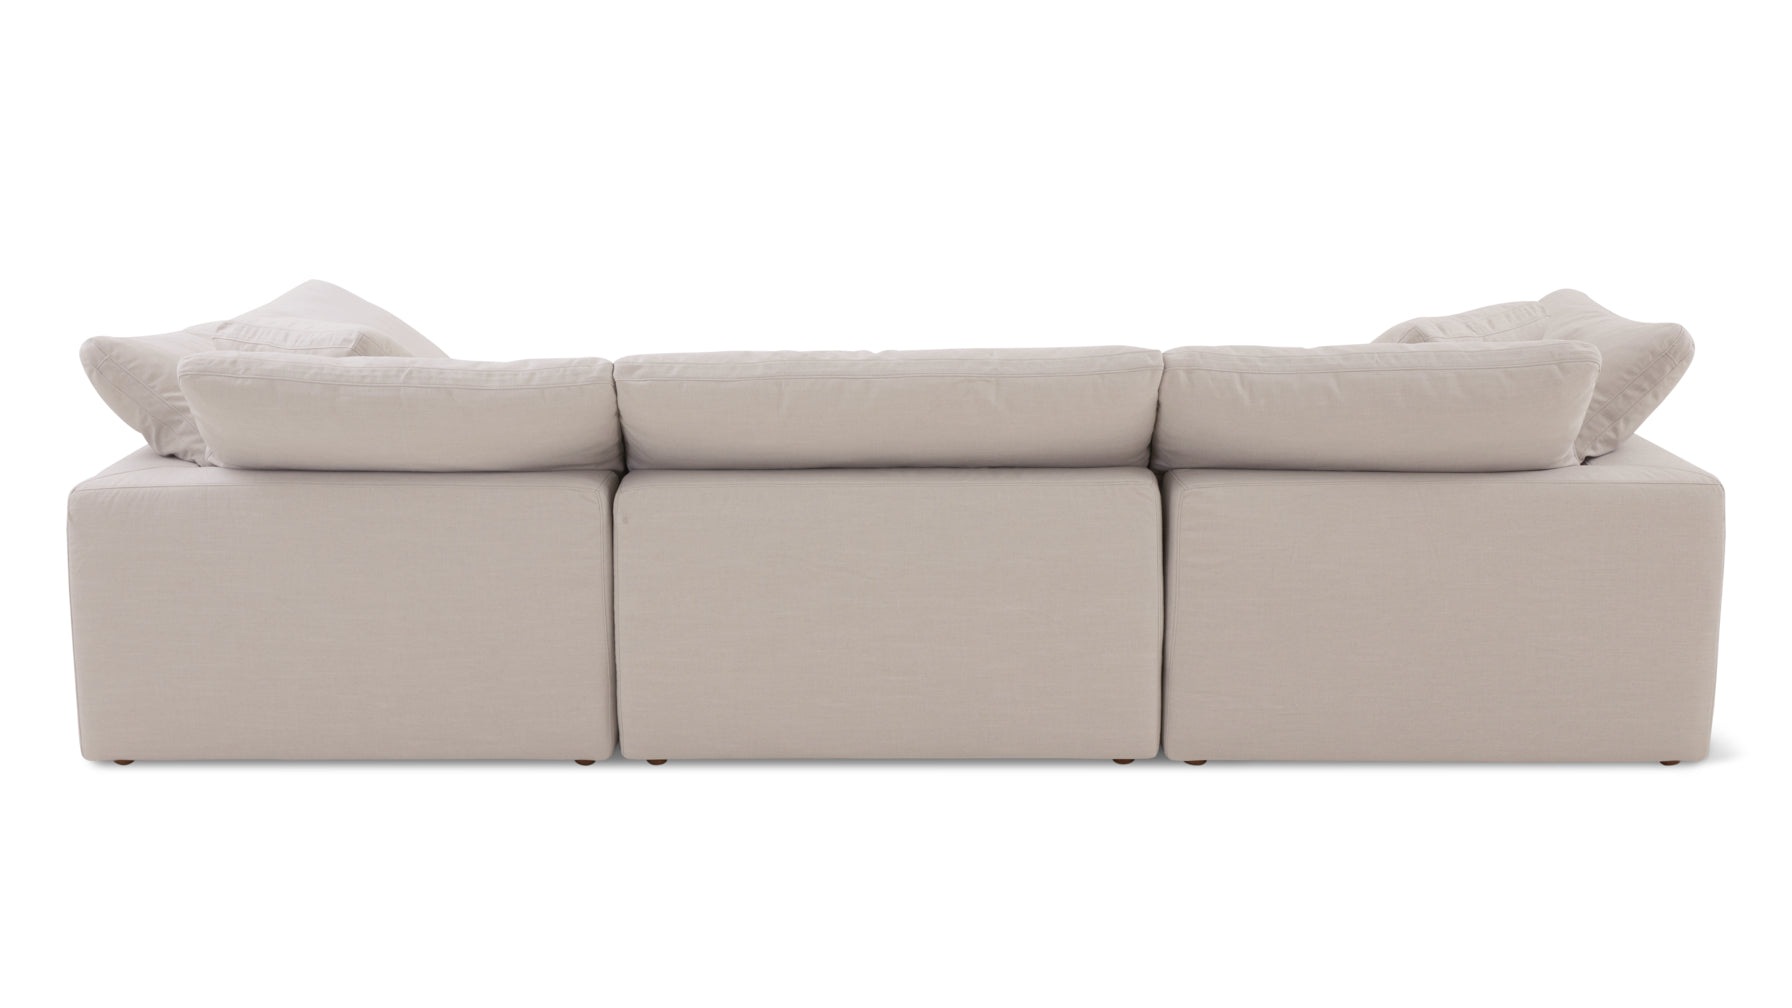 Movie Night™ 3-Piece Modular Sofa, Standard, Clay - Image 7